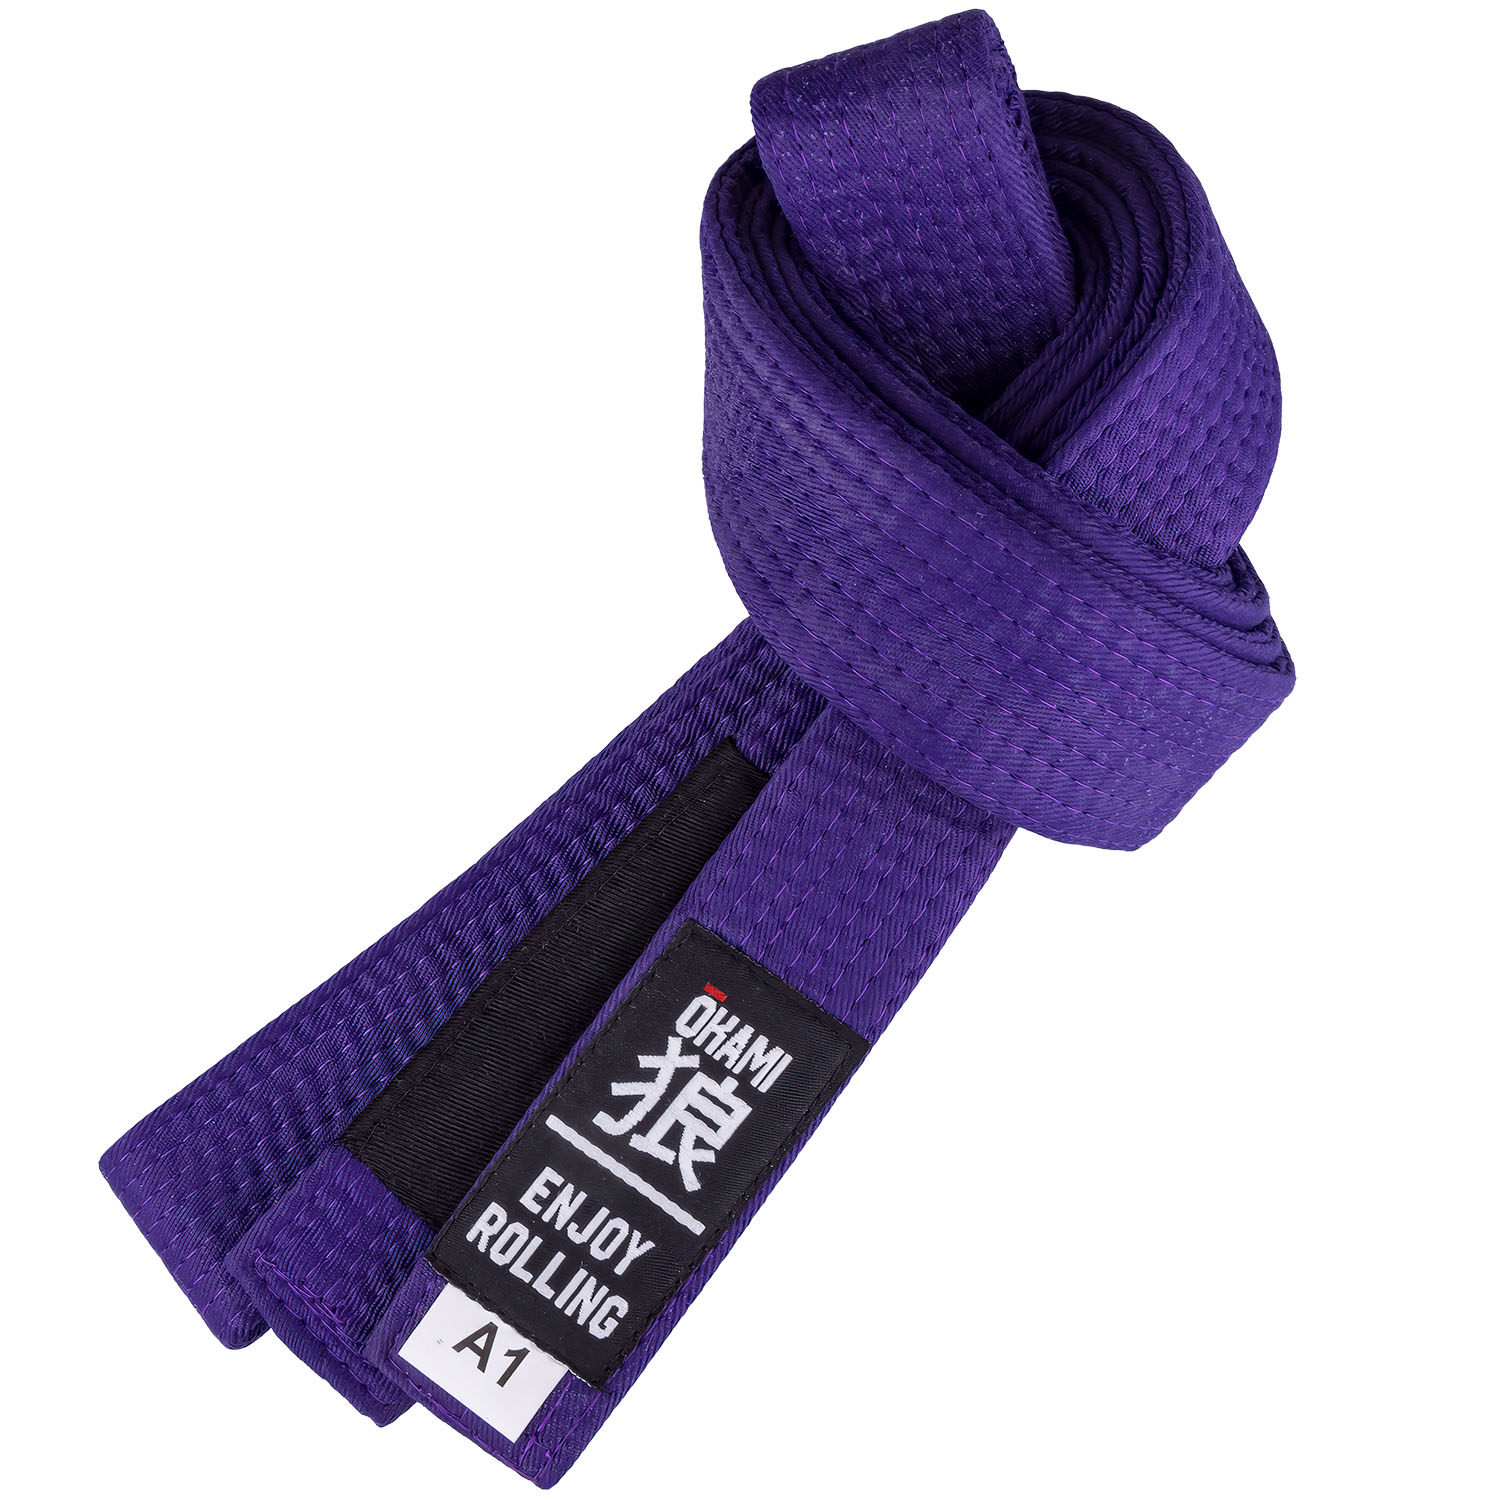 OKAMI BJJ Belt, Luta Livre, purple